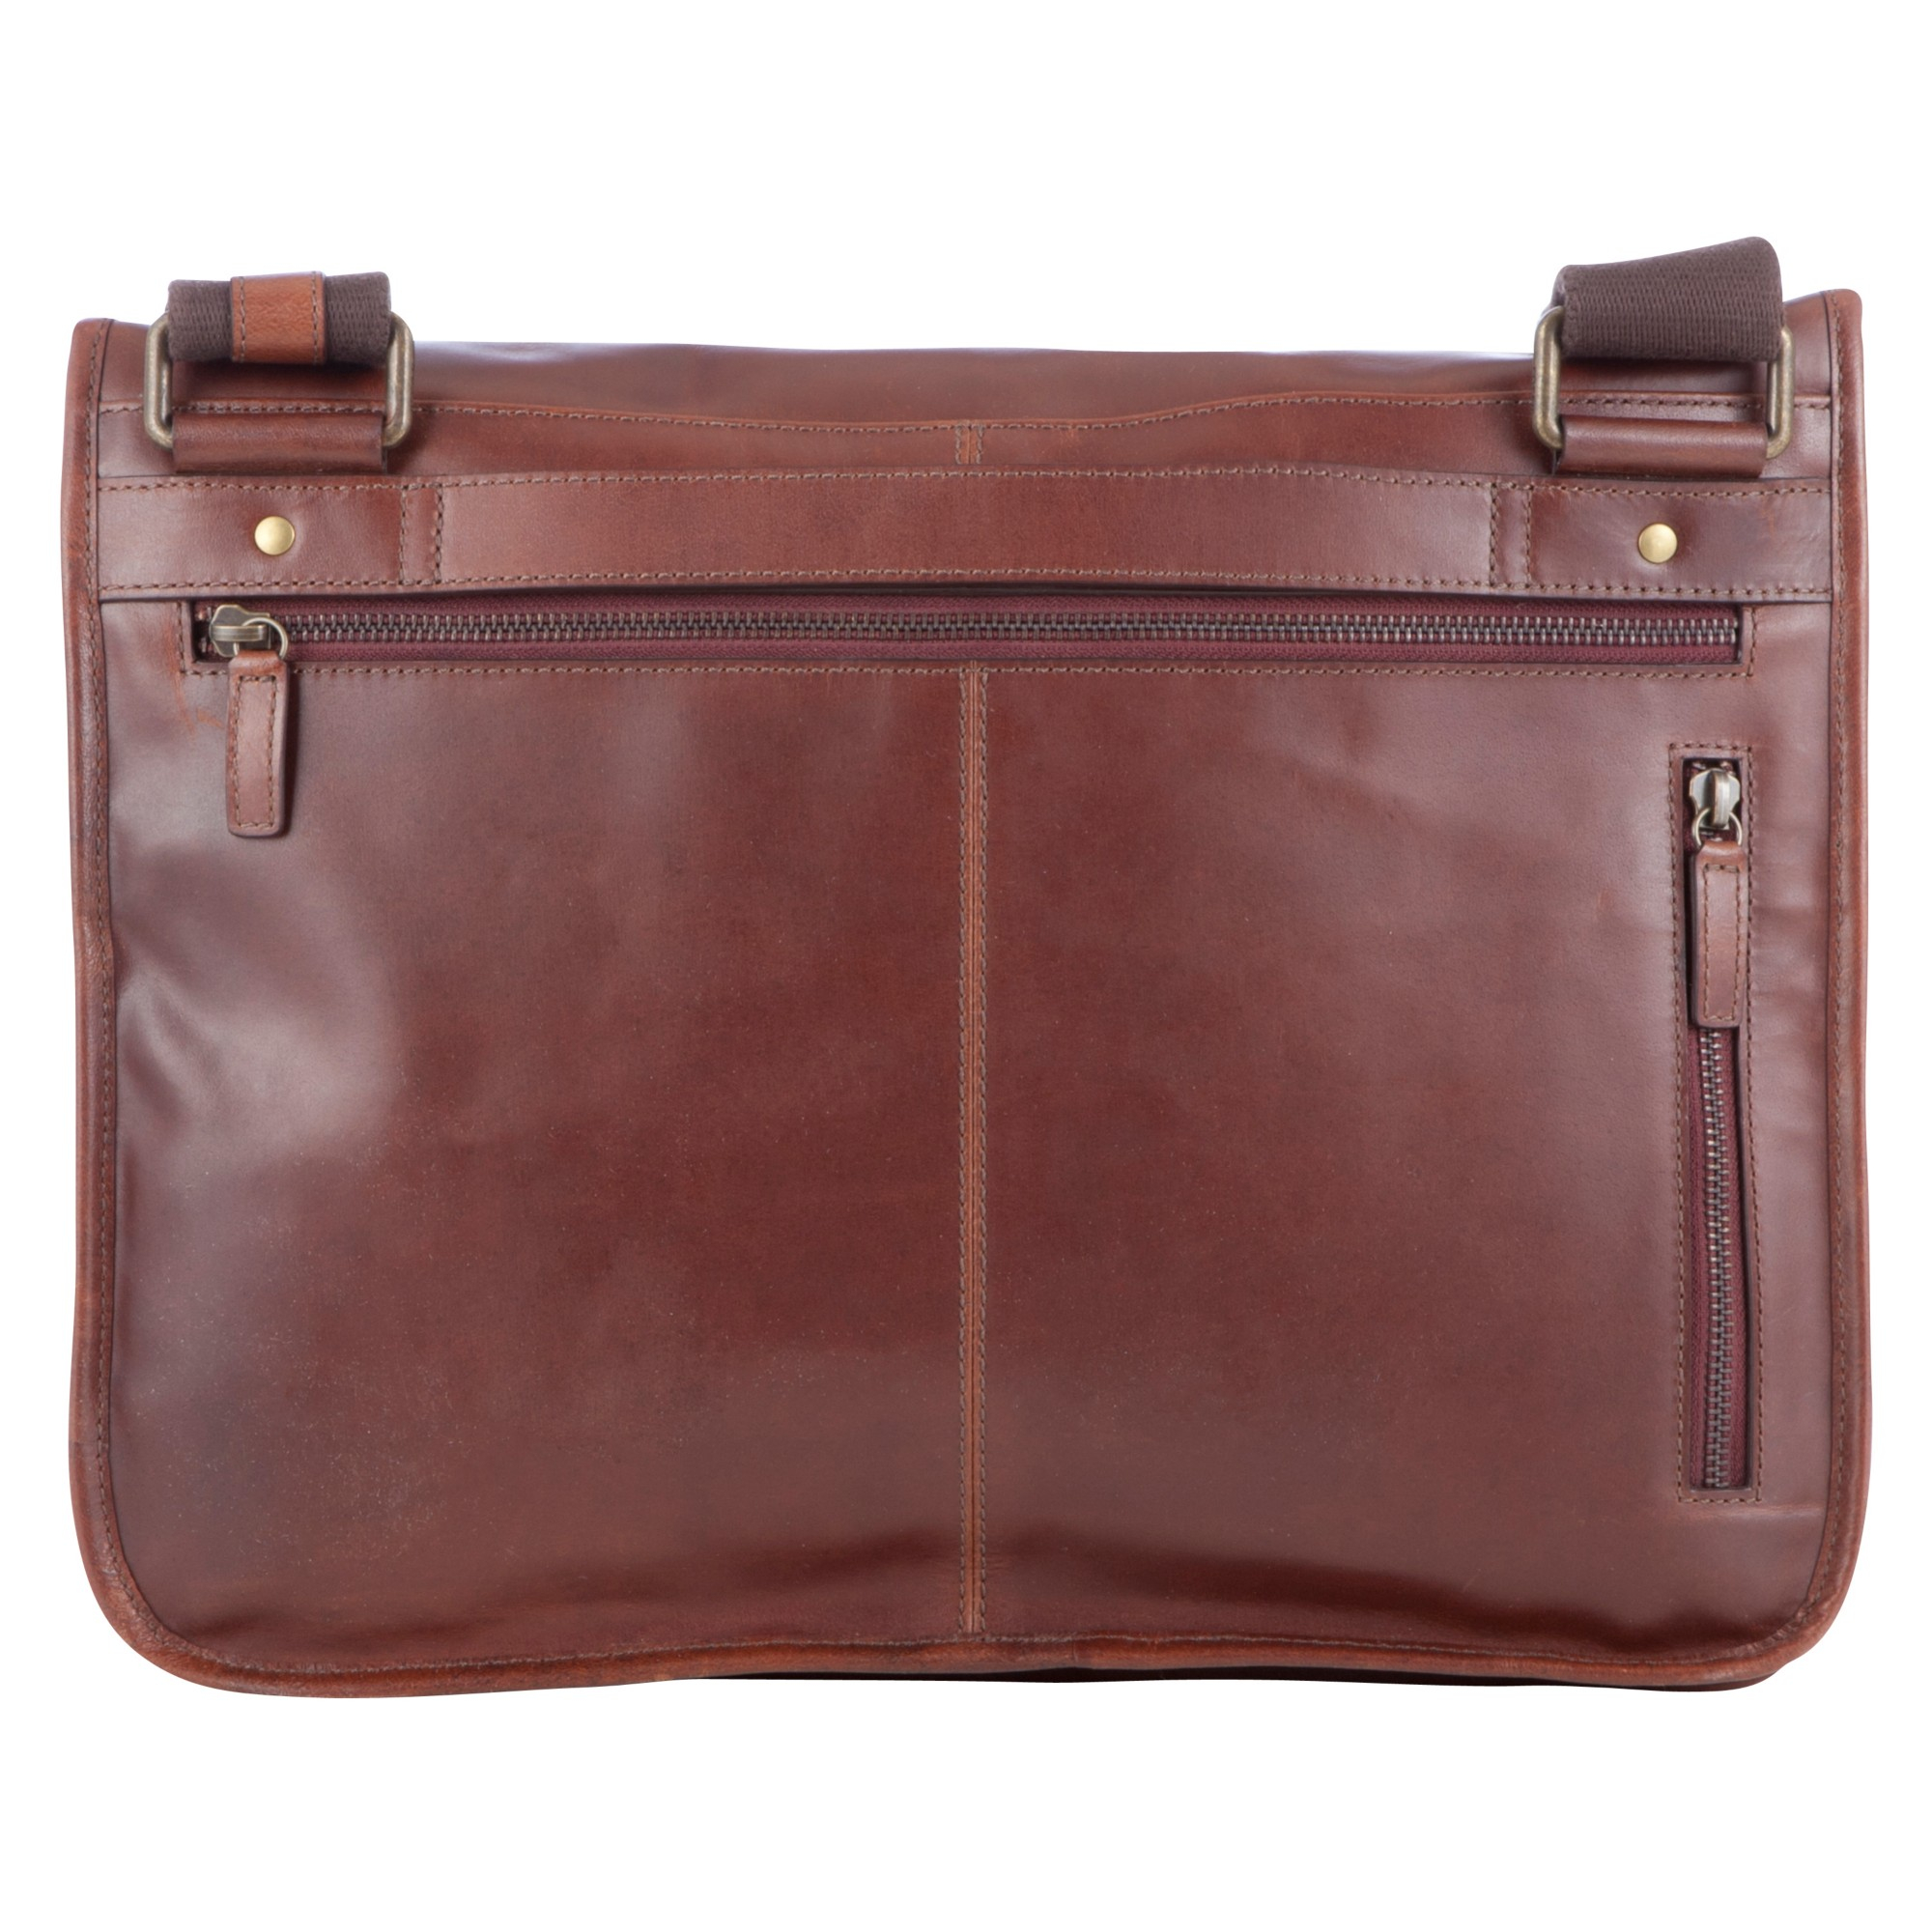 John Lewis Salvadore Leather Messenger Bag in Brown for Men - Lyst